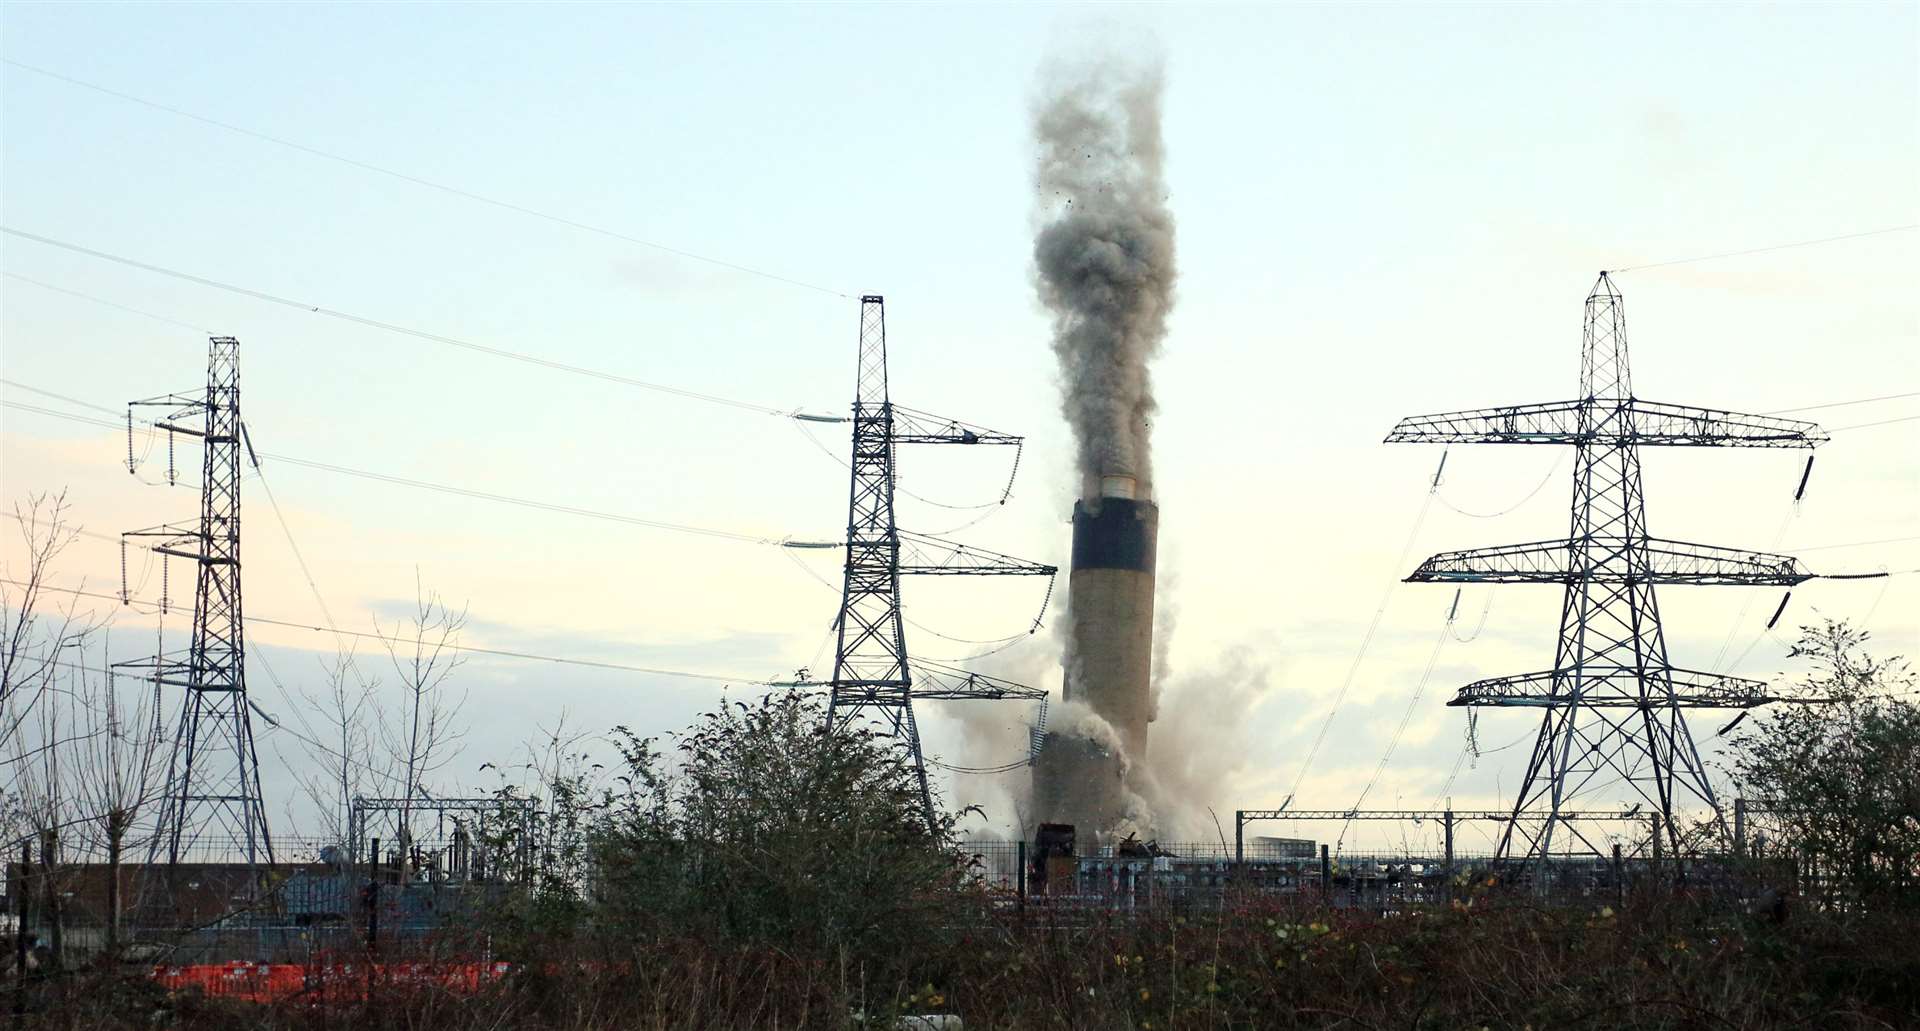 Despite some opposition,the chimney at Littlebrook Power Station in Dartford was demolished on Sunday. Picture: Phil Lee